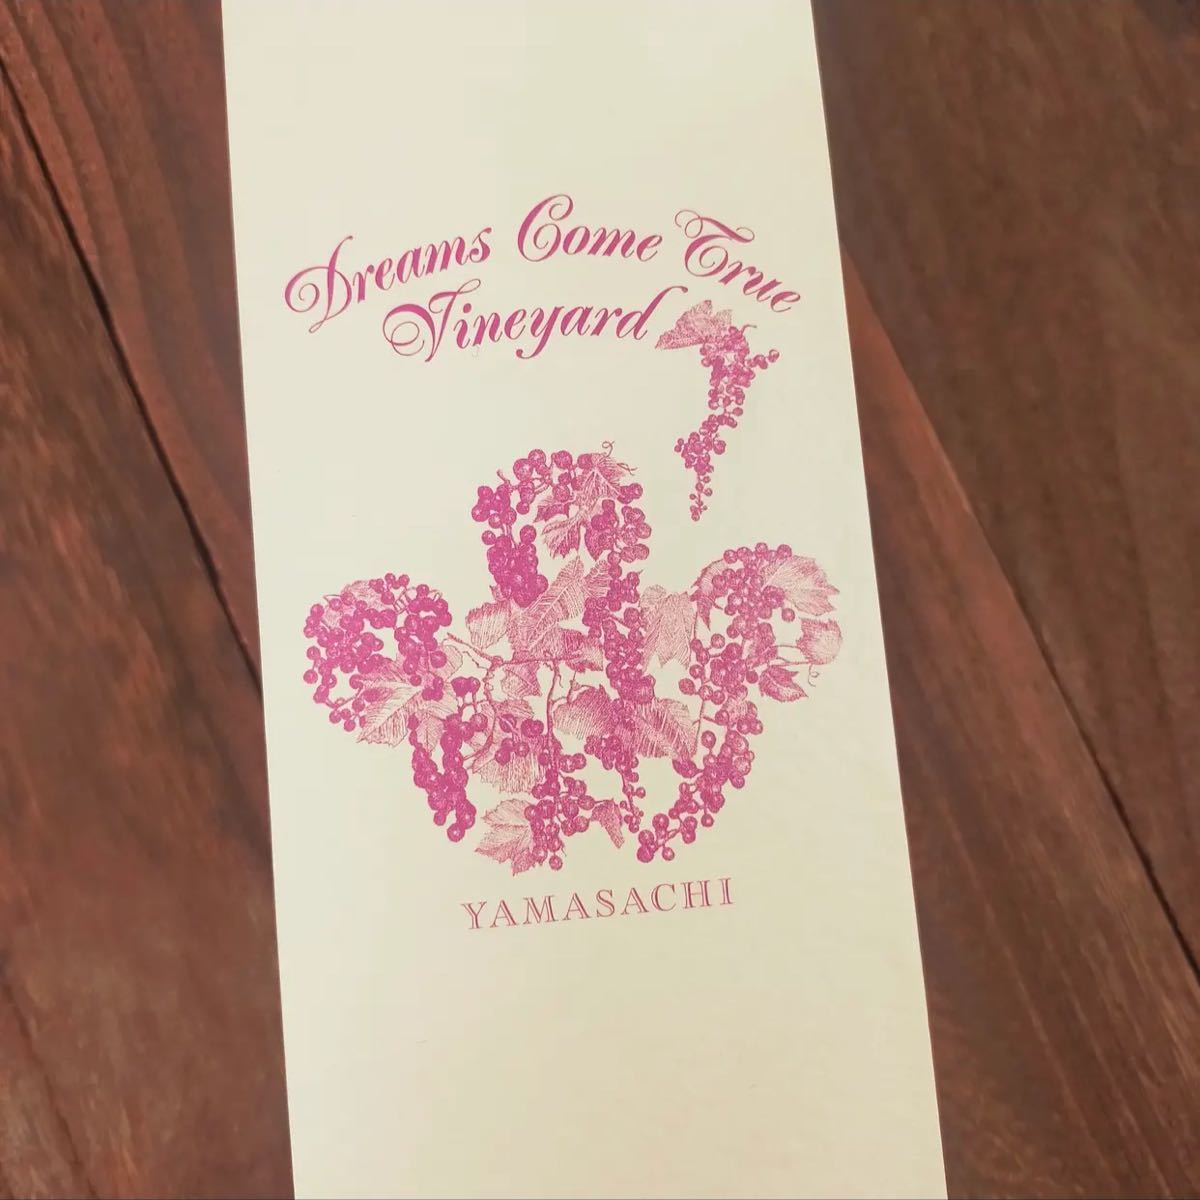 DREAMS COME TRUE VINEYARD ヴィンテージワイン(2017) 十勝(山幸・720ml) ドリカムワイン